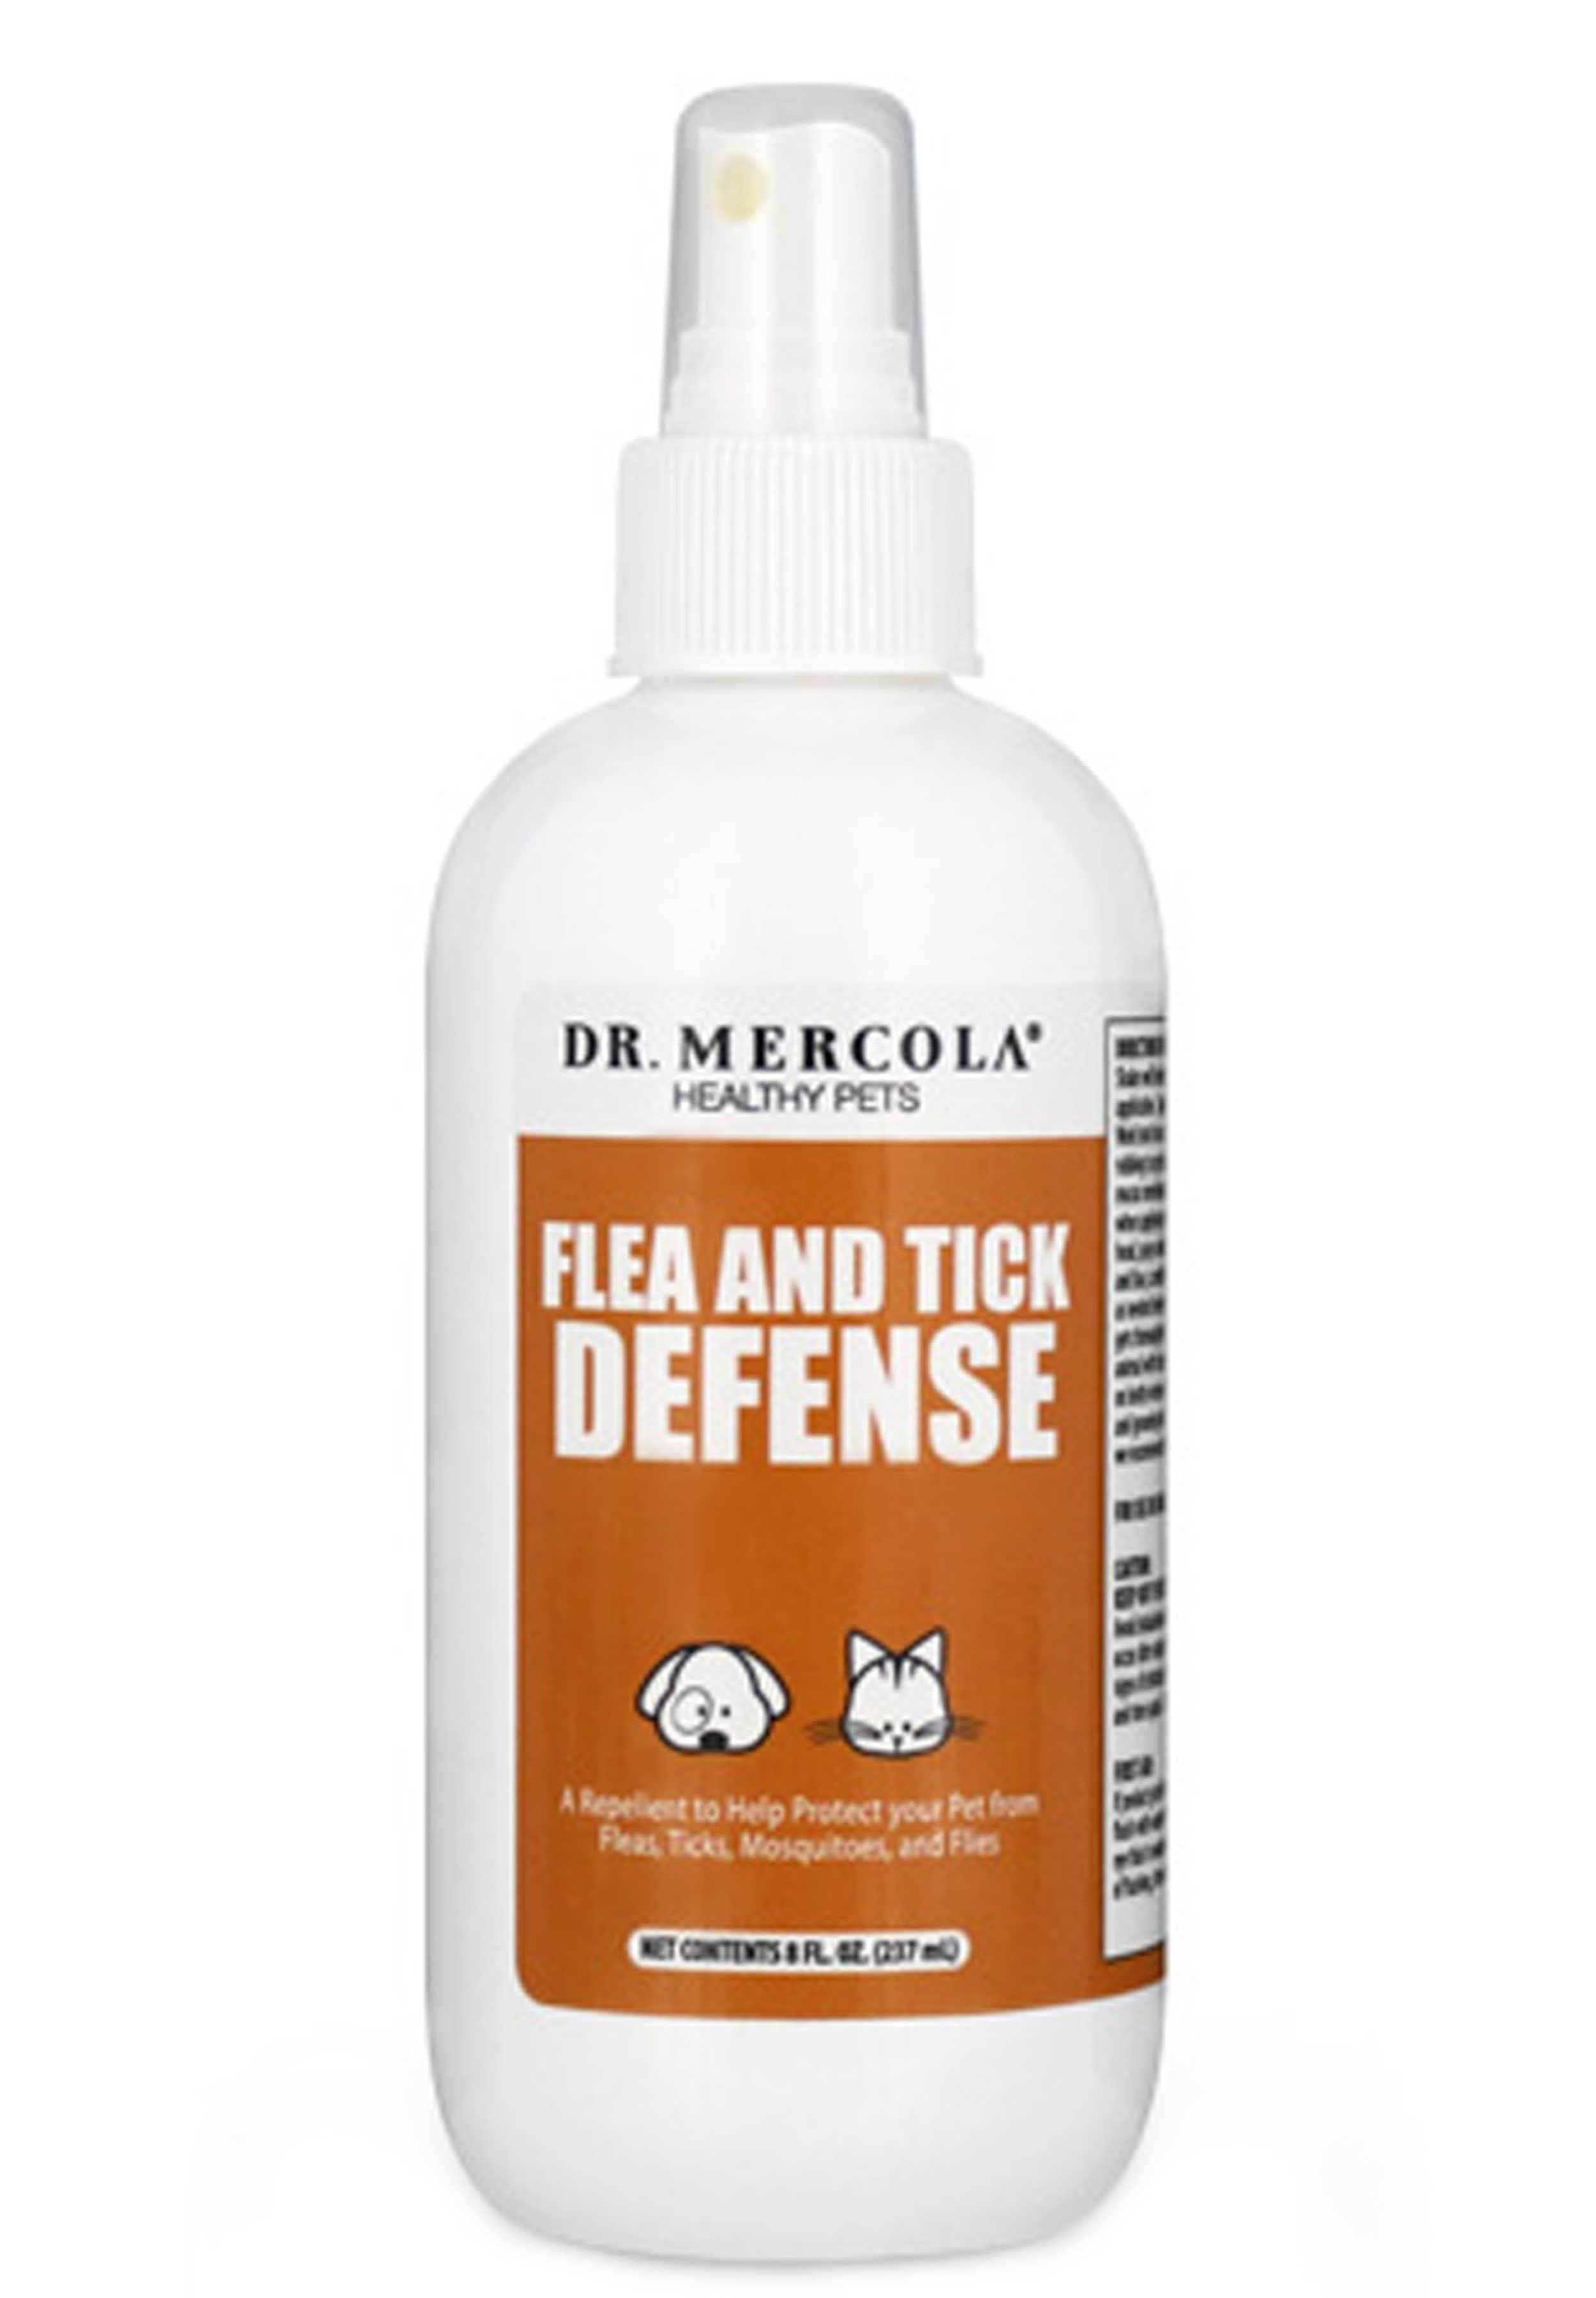 Dr. Mercola Flea and Tick Defense Spray